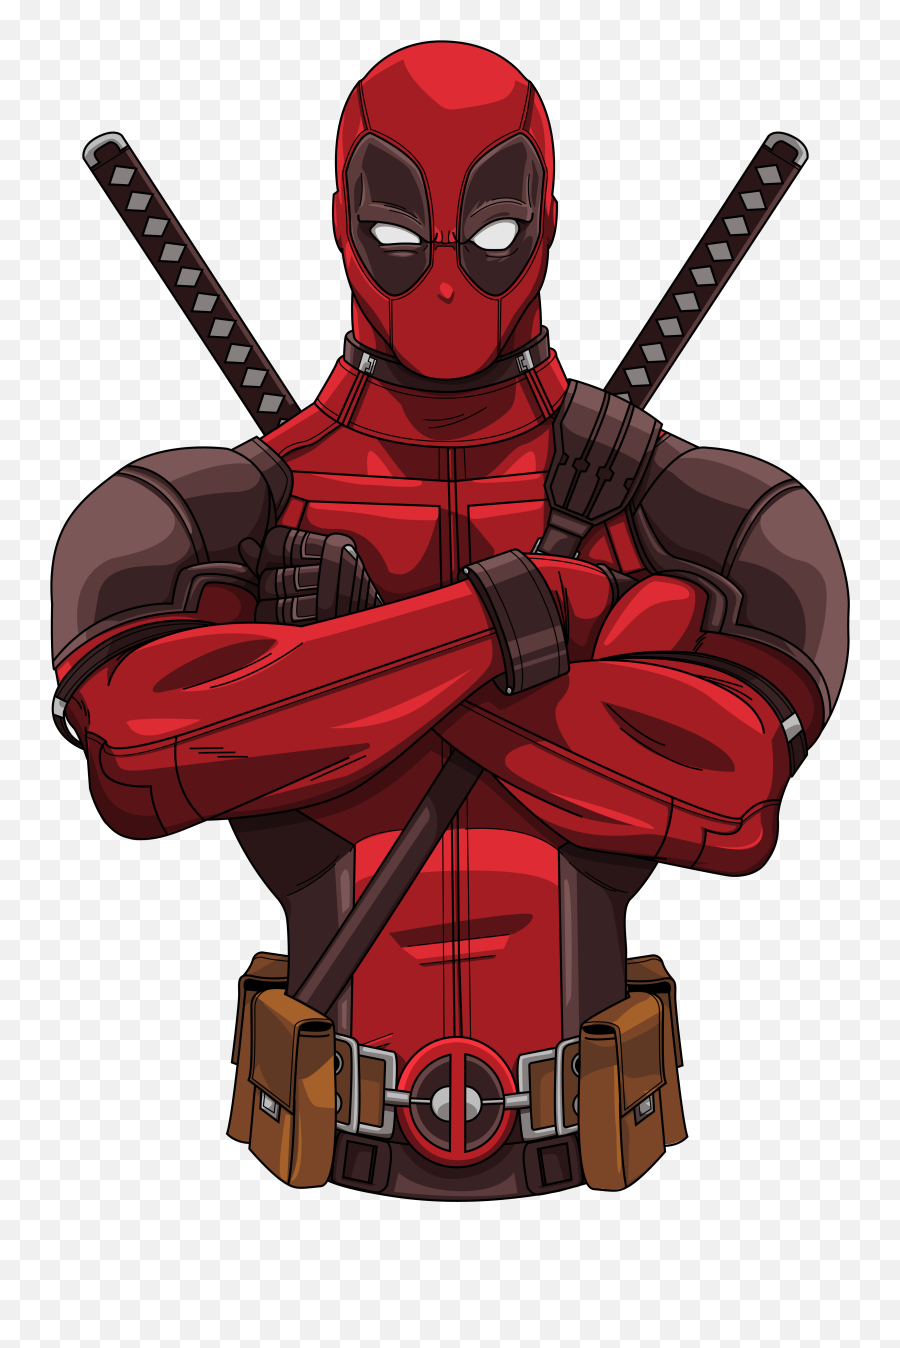 Deadpool Png Images Free Download Ryan Reynolds